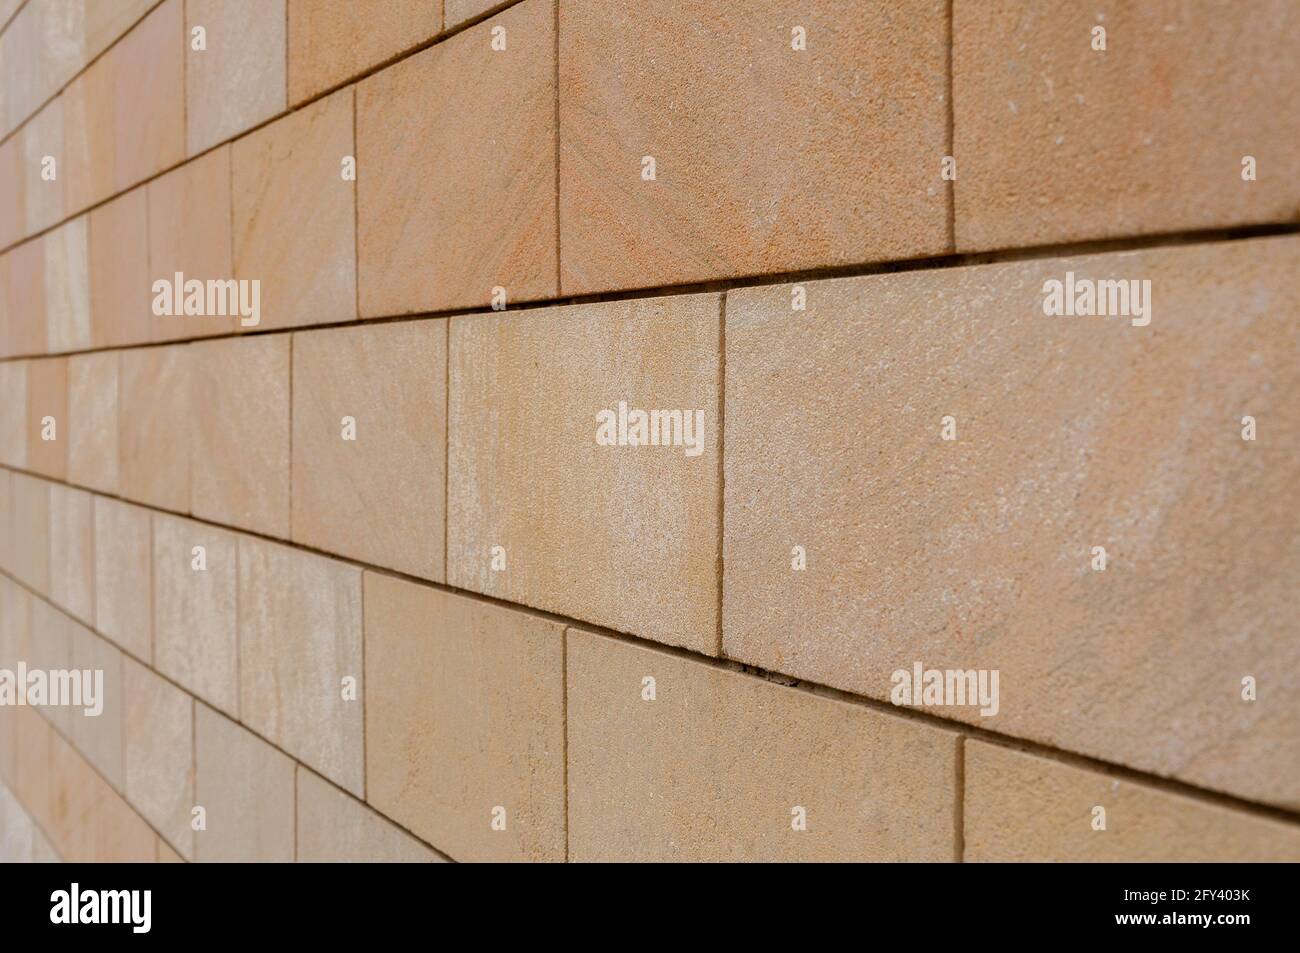 sandstone cladding panels